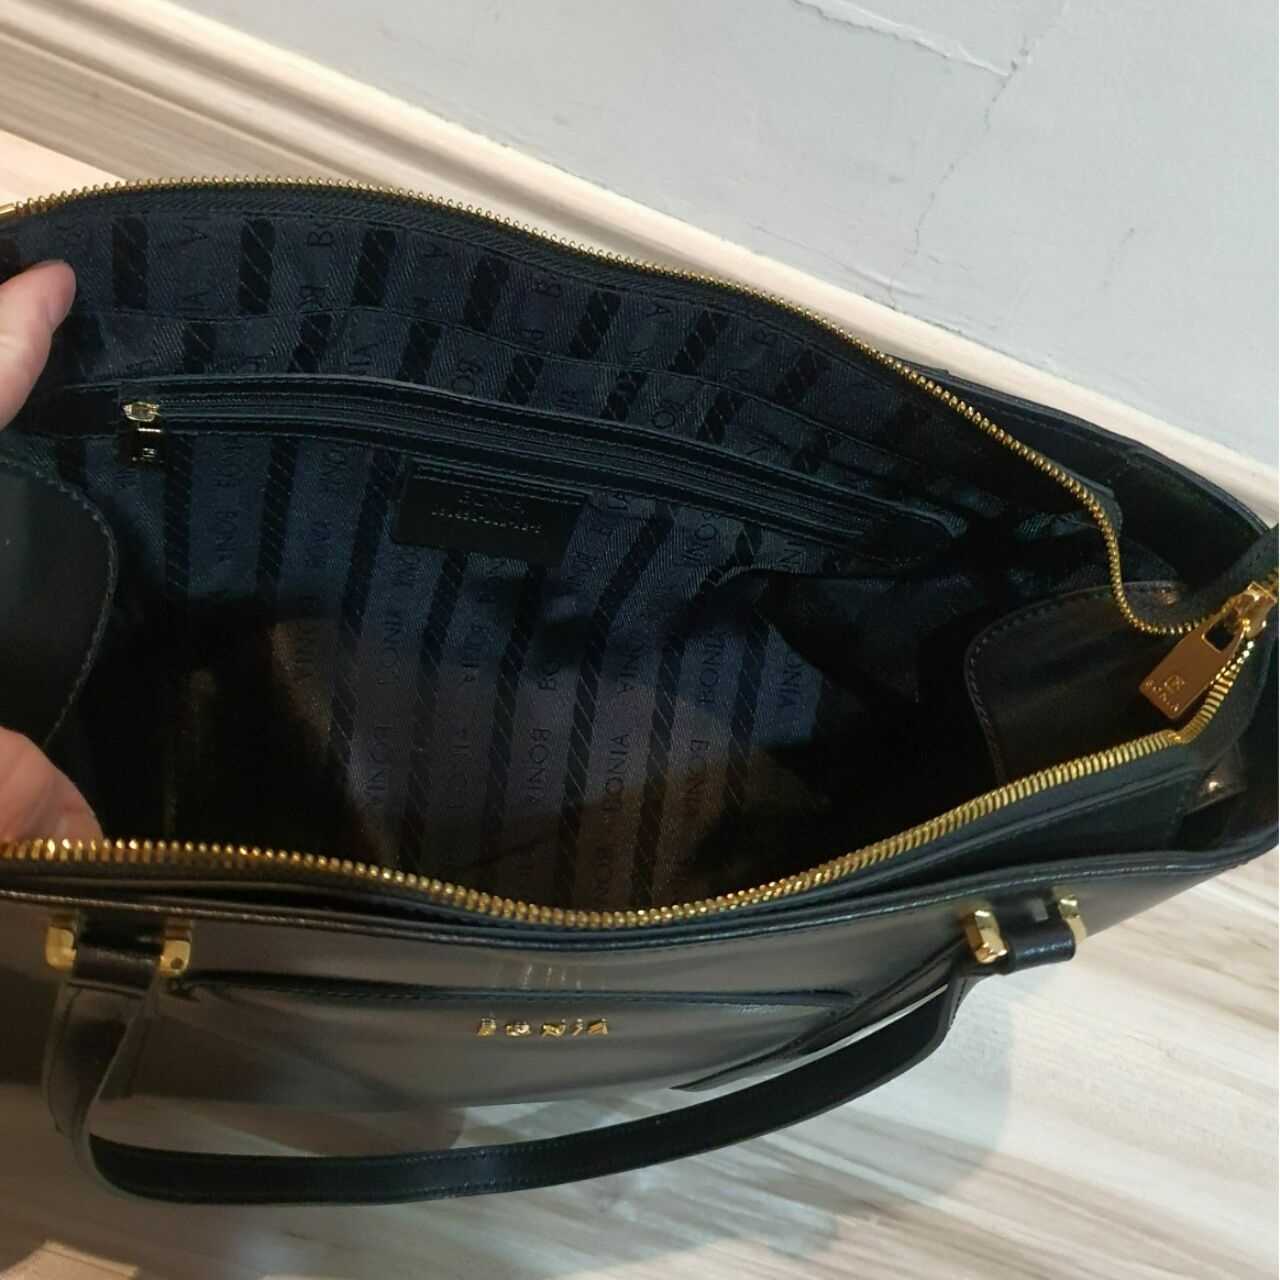 Bonia Black Shoulder Bag